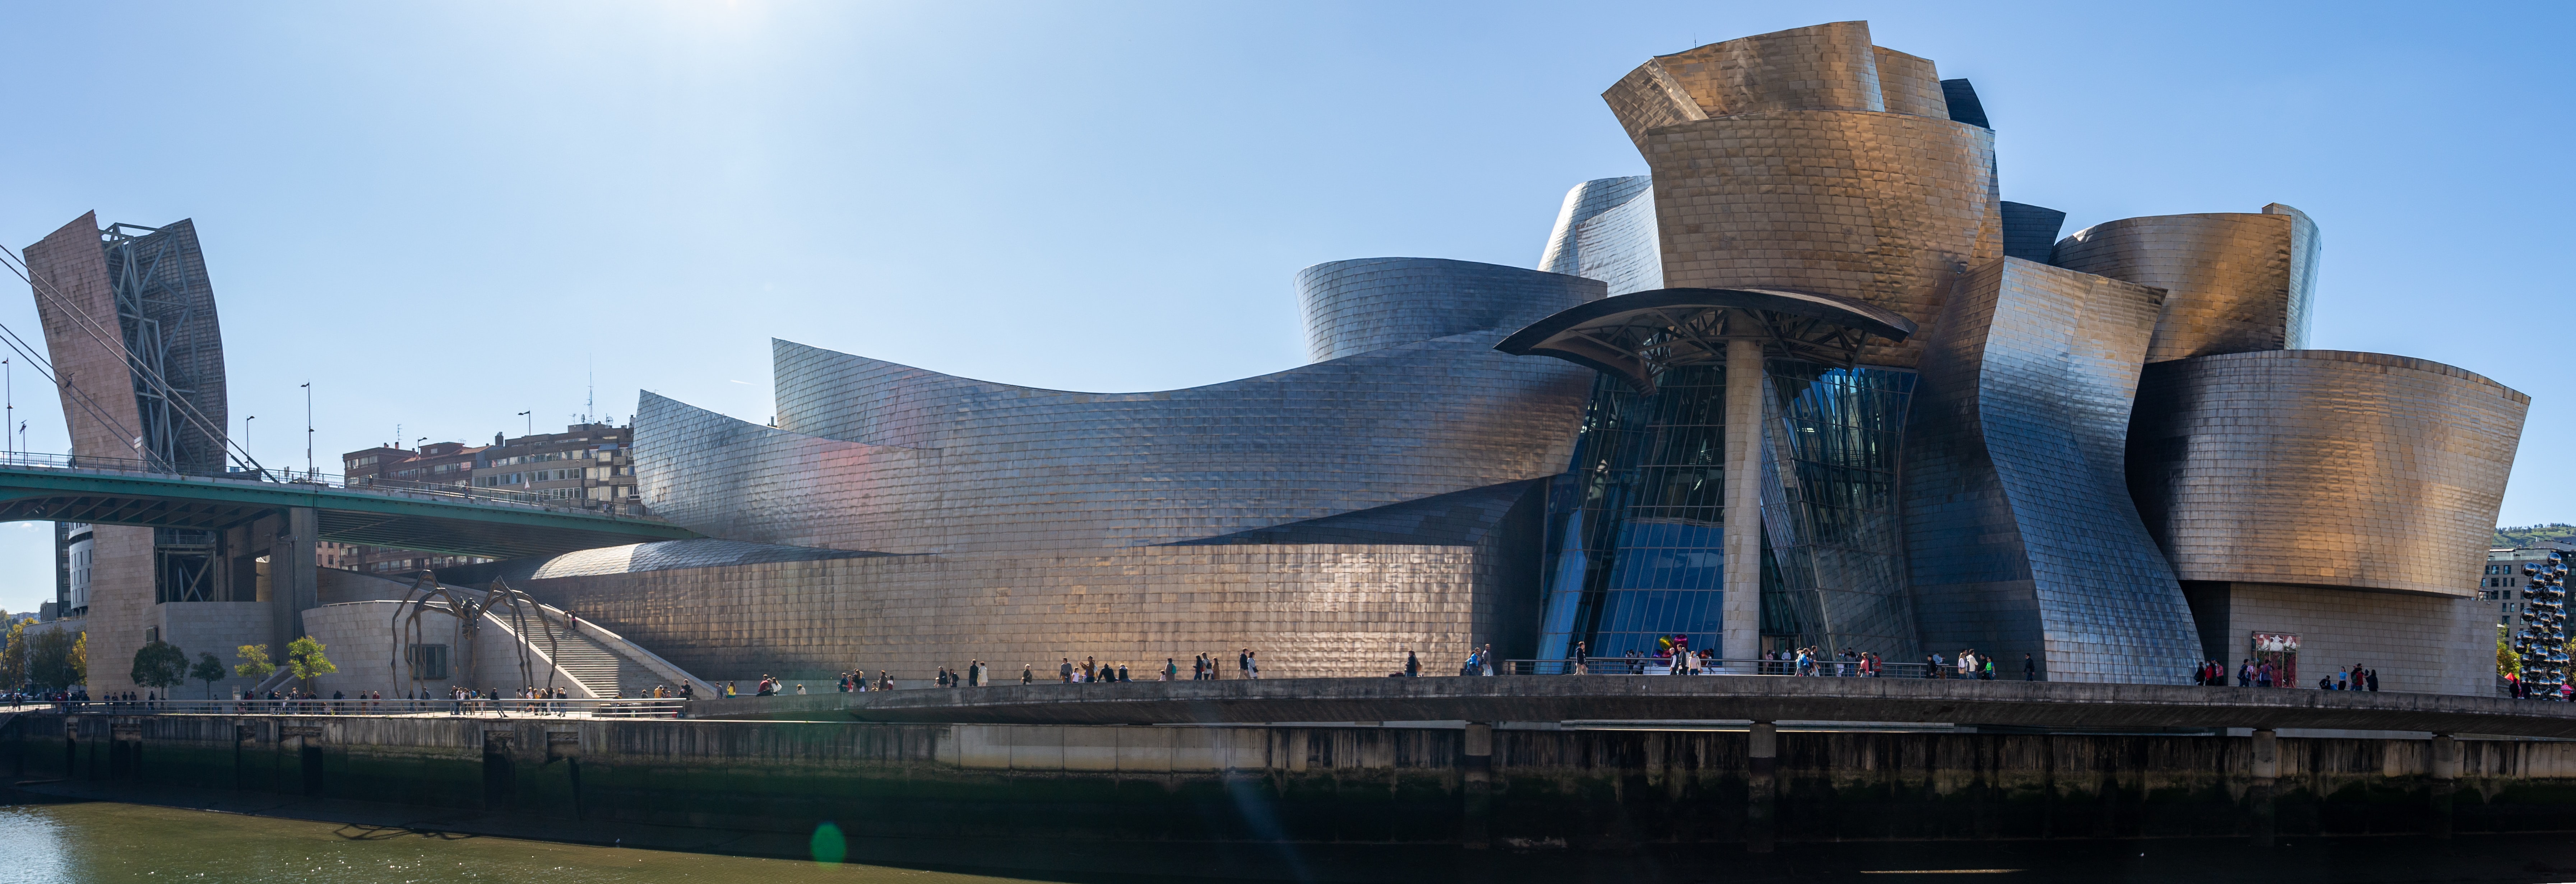 Guggenheim Bilbao y su magistral arquitectura